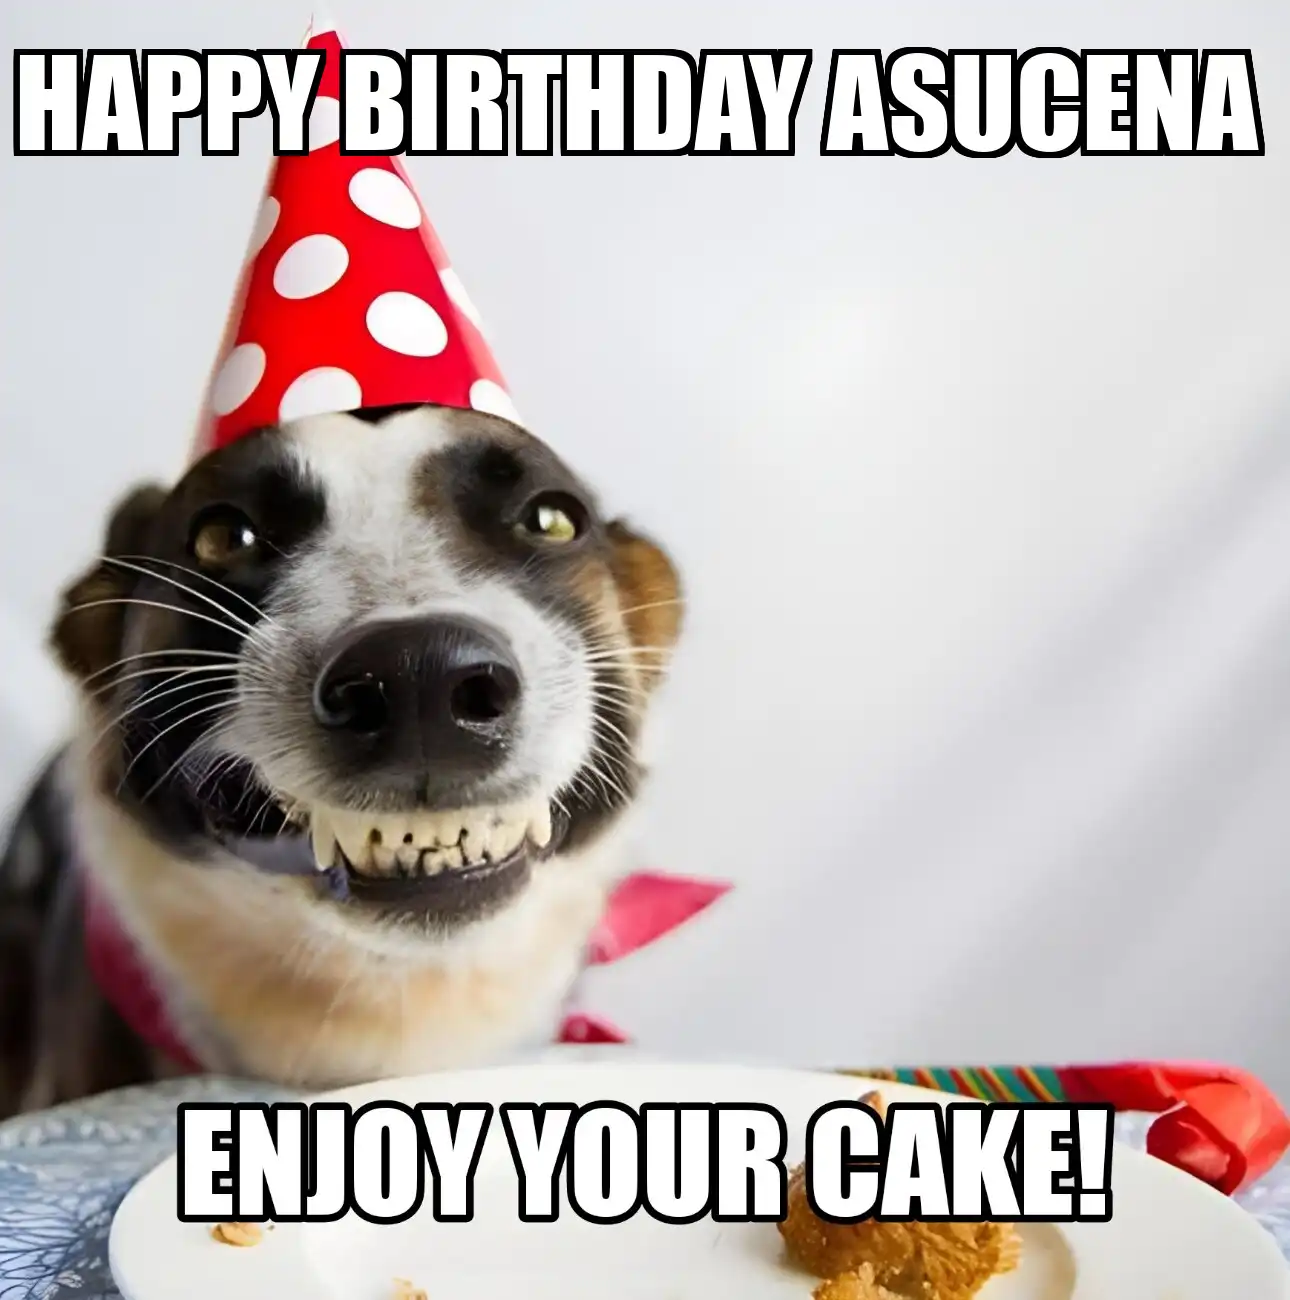 Happy Birthday Asucena Enjoy Your Cake Dog Meme